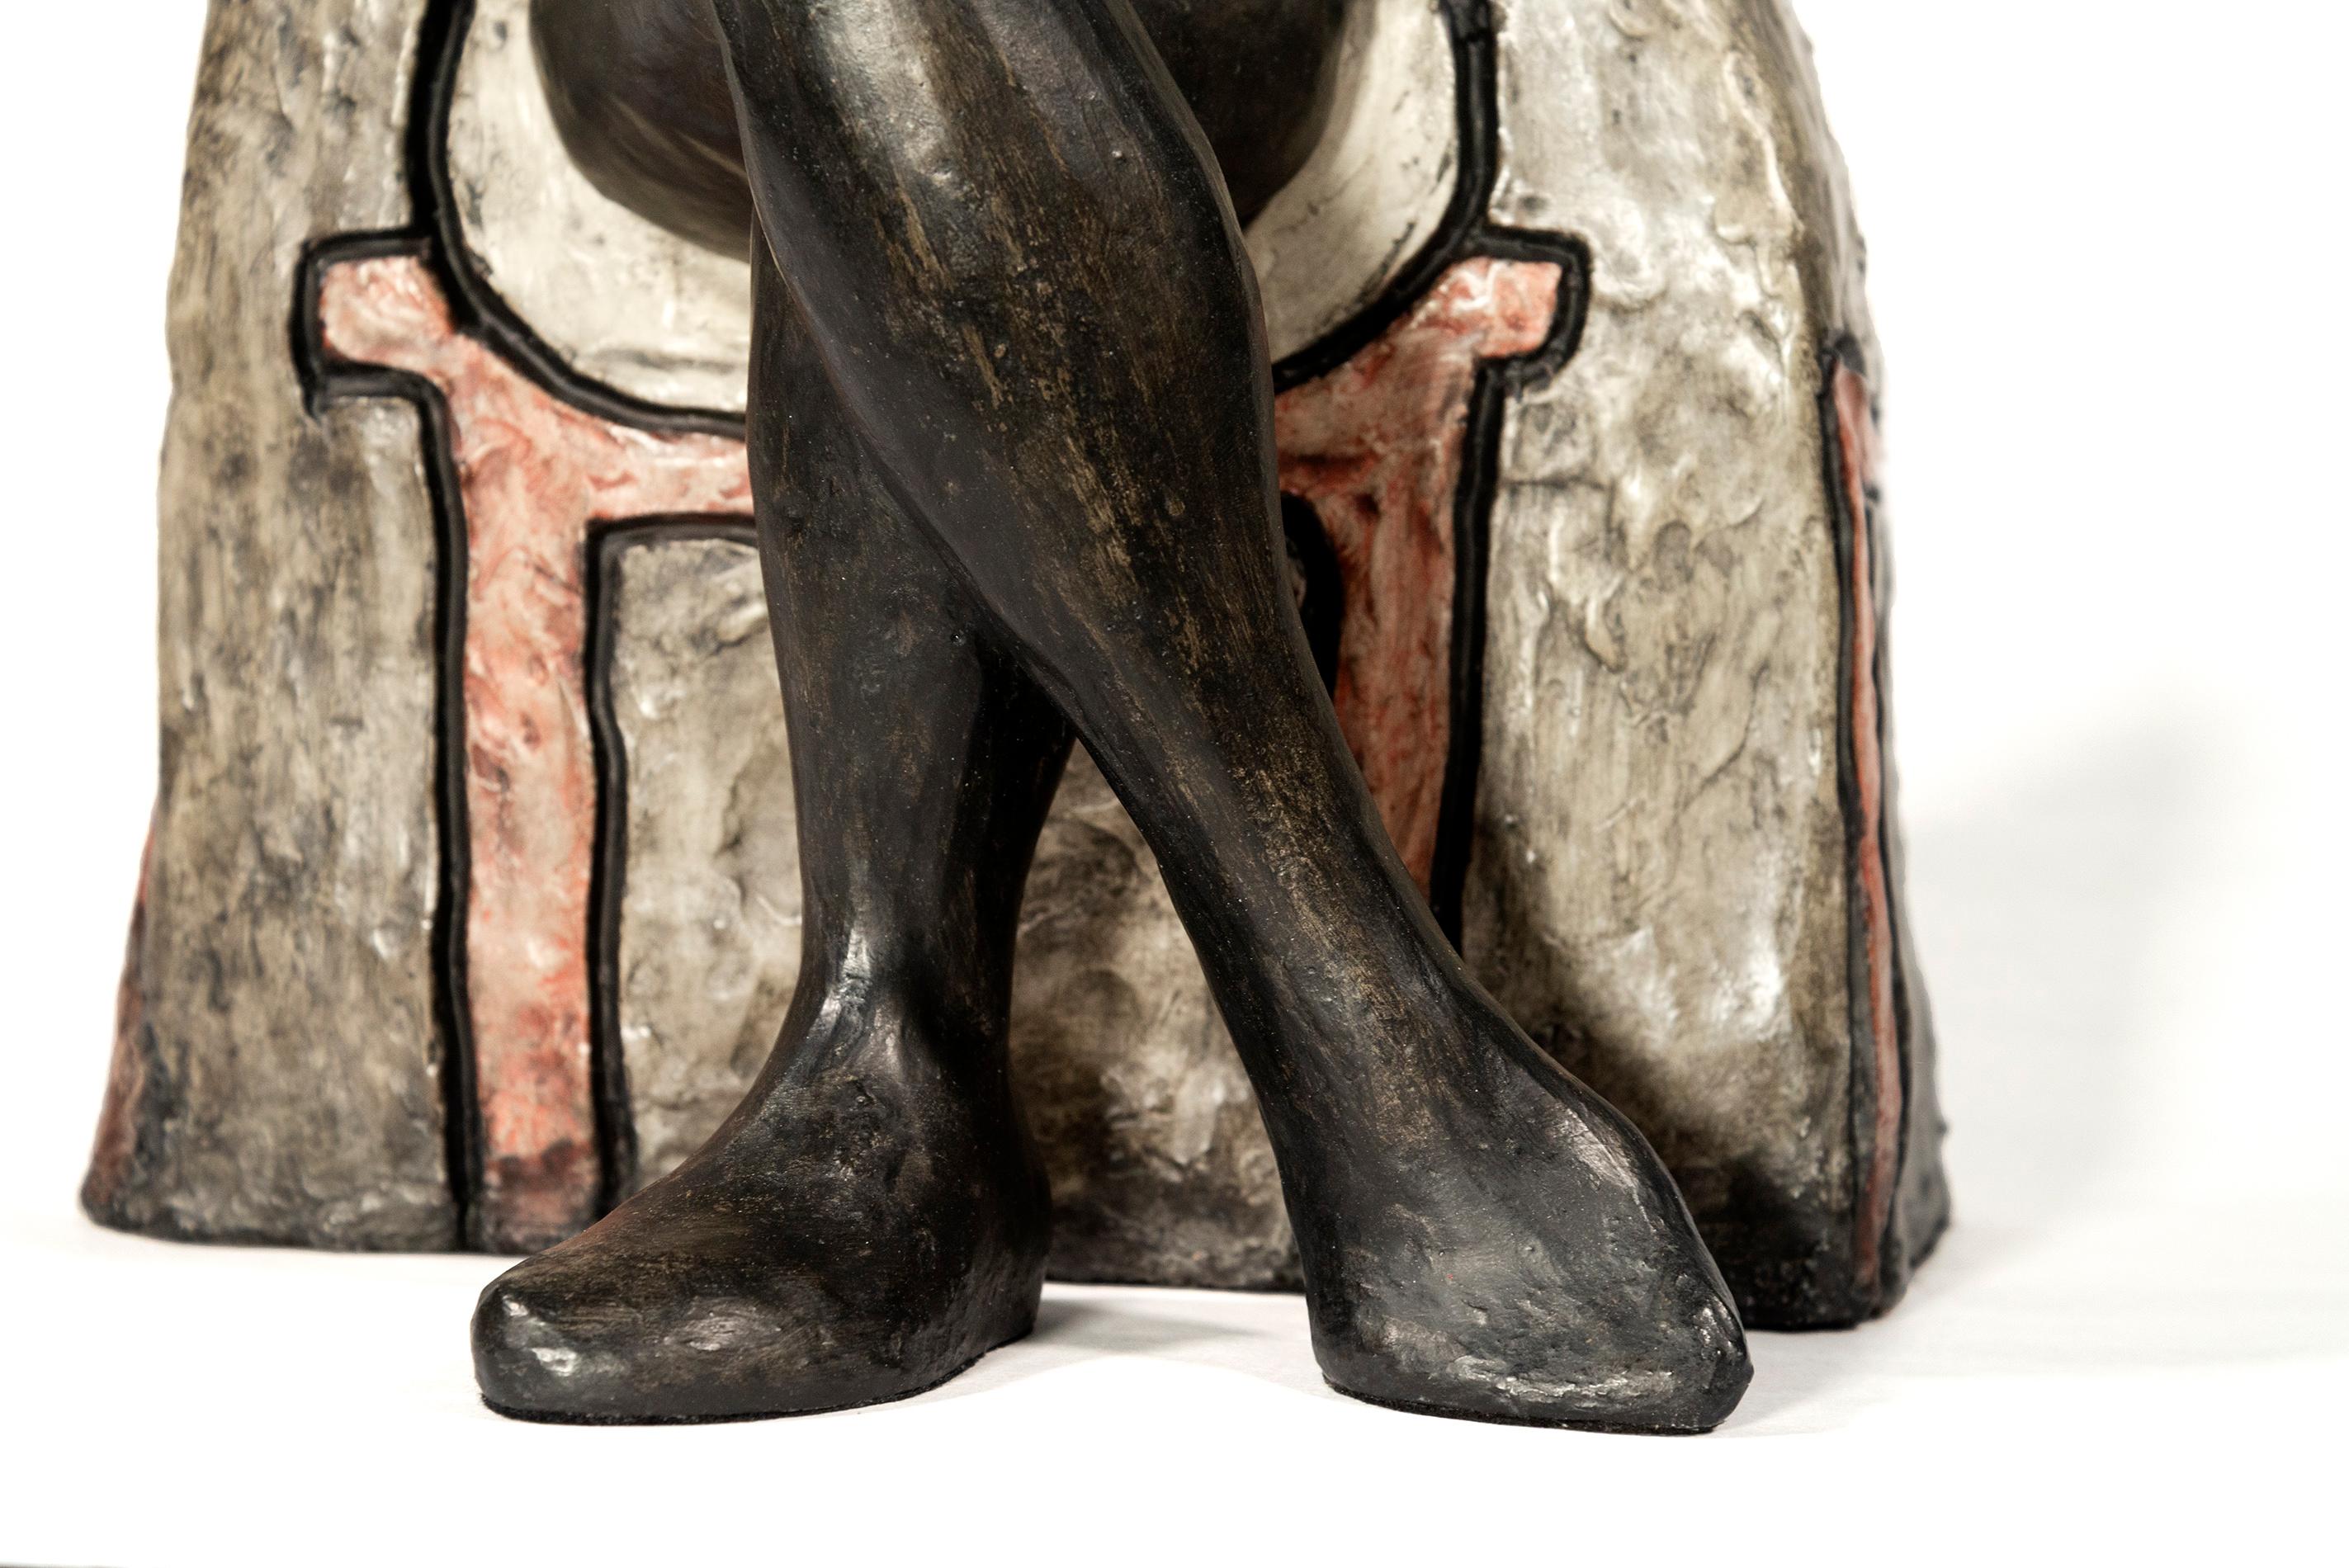 Cwén- figurative, female, polymer, gypsum, tabletop sculpture - Contemporary Sculpture by Frances Semple